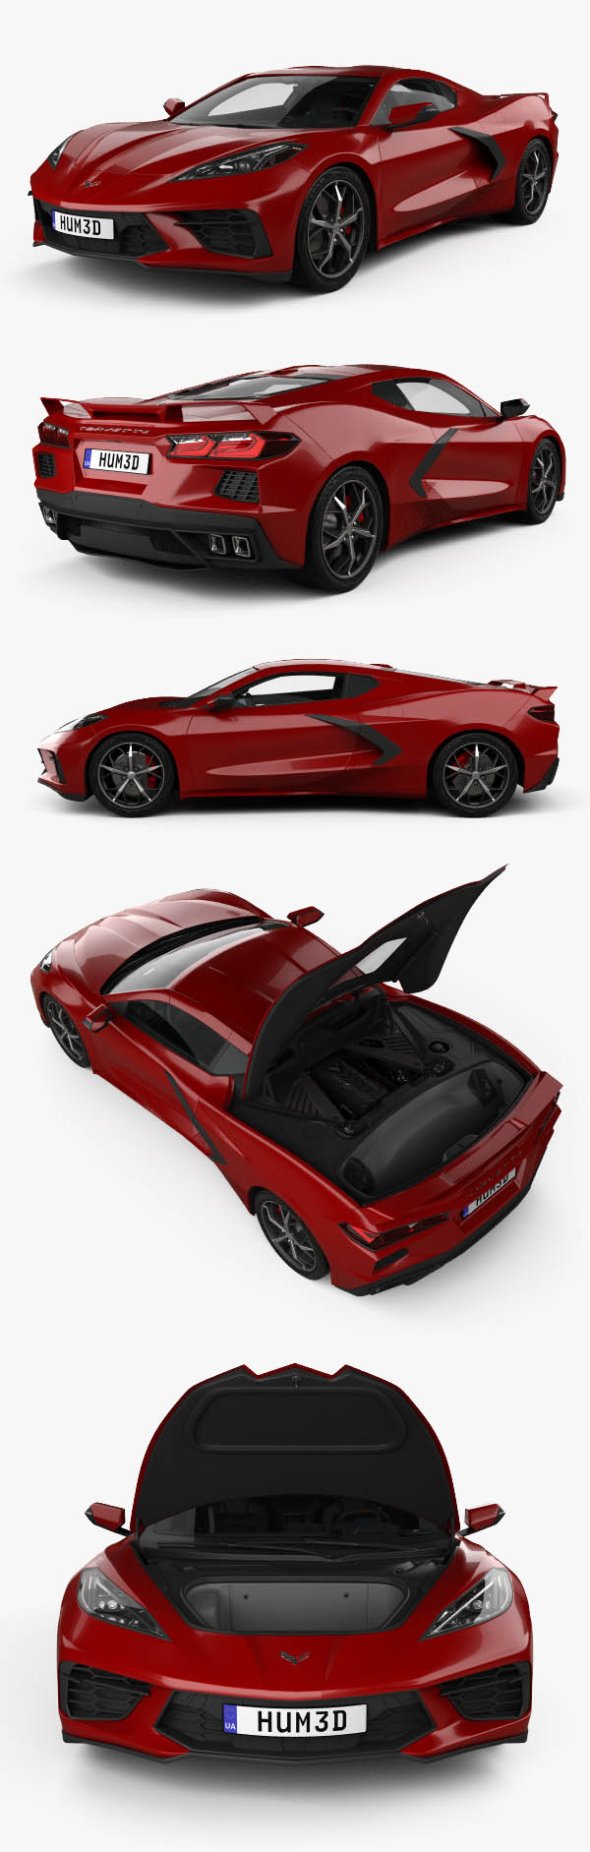 Chevrolet Corvette Stingray with HQ interior and engine 2022